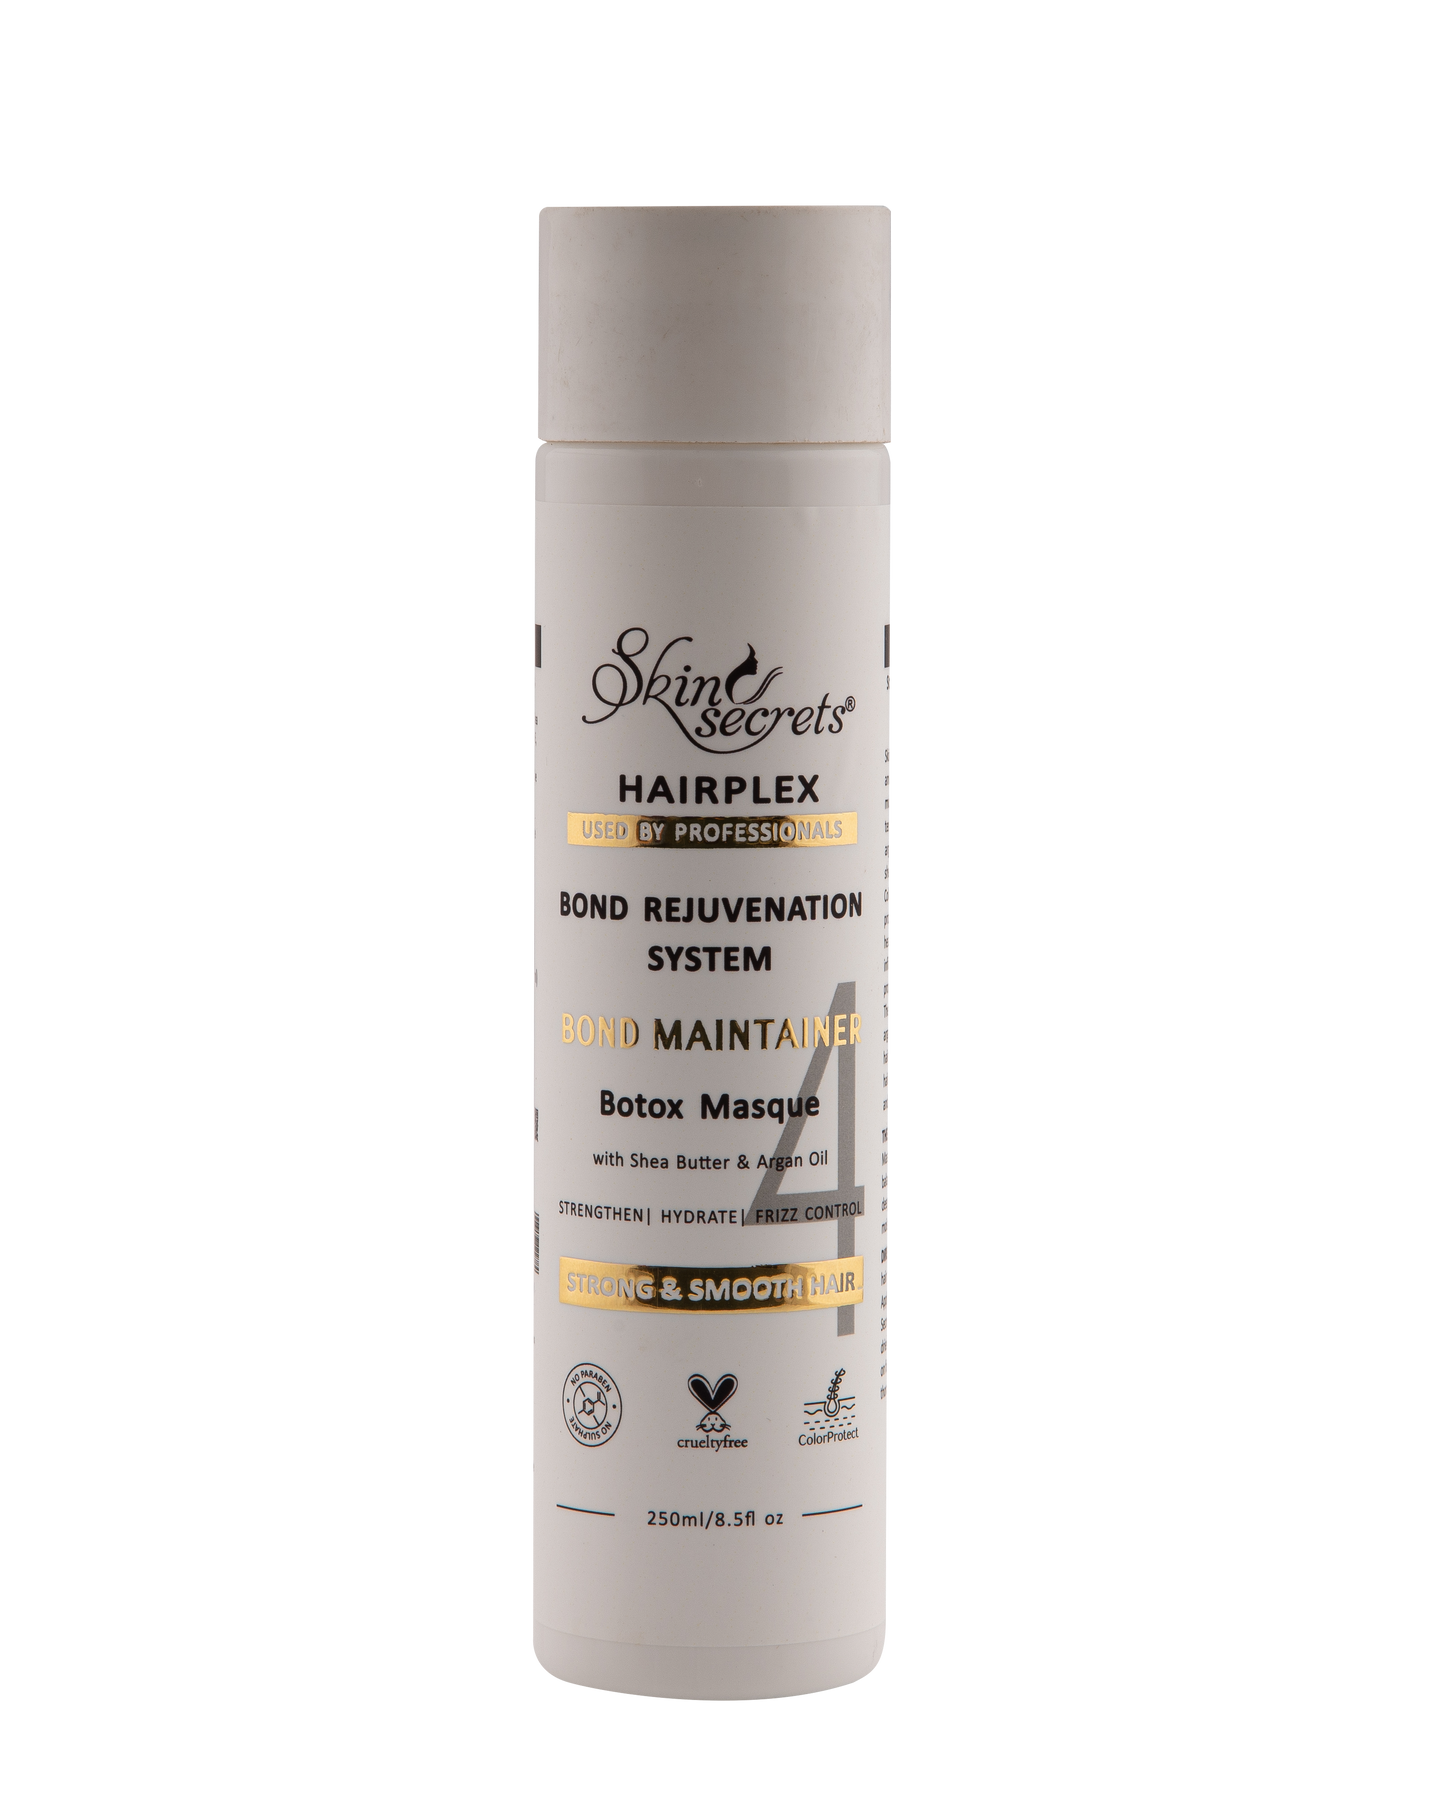 Skin Secrets Bond Maintainer BOTOX Masque with Shea Butter & Argan Oil| Paraben & Mineral Oil Free| 250ml